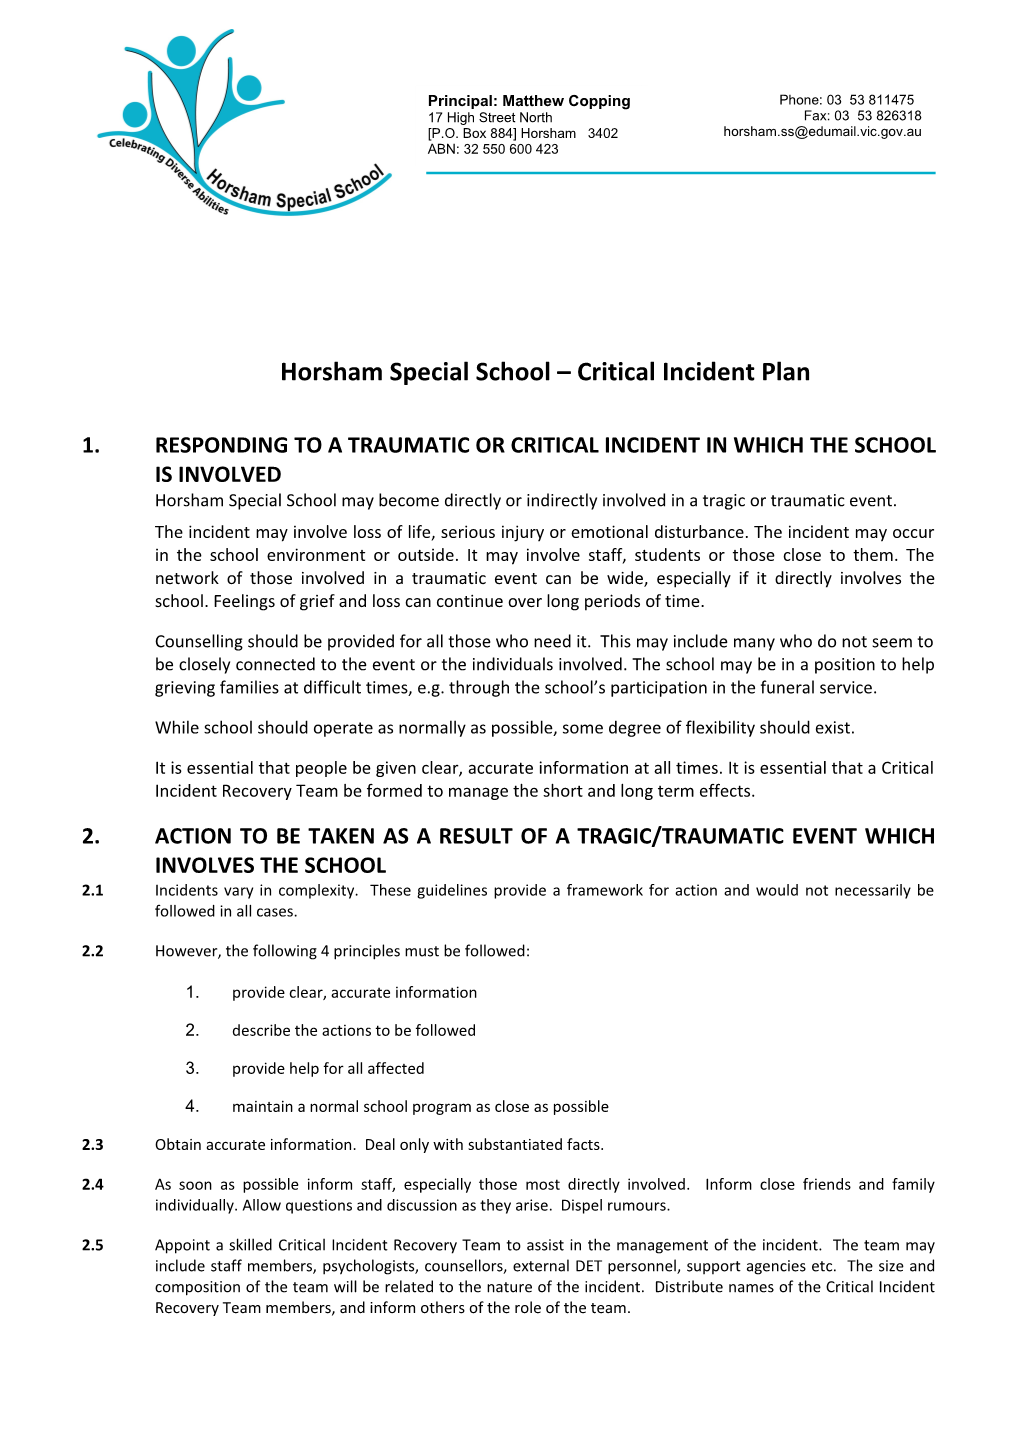 Horsham Special School Critical Incident Plan